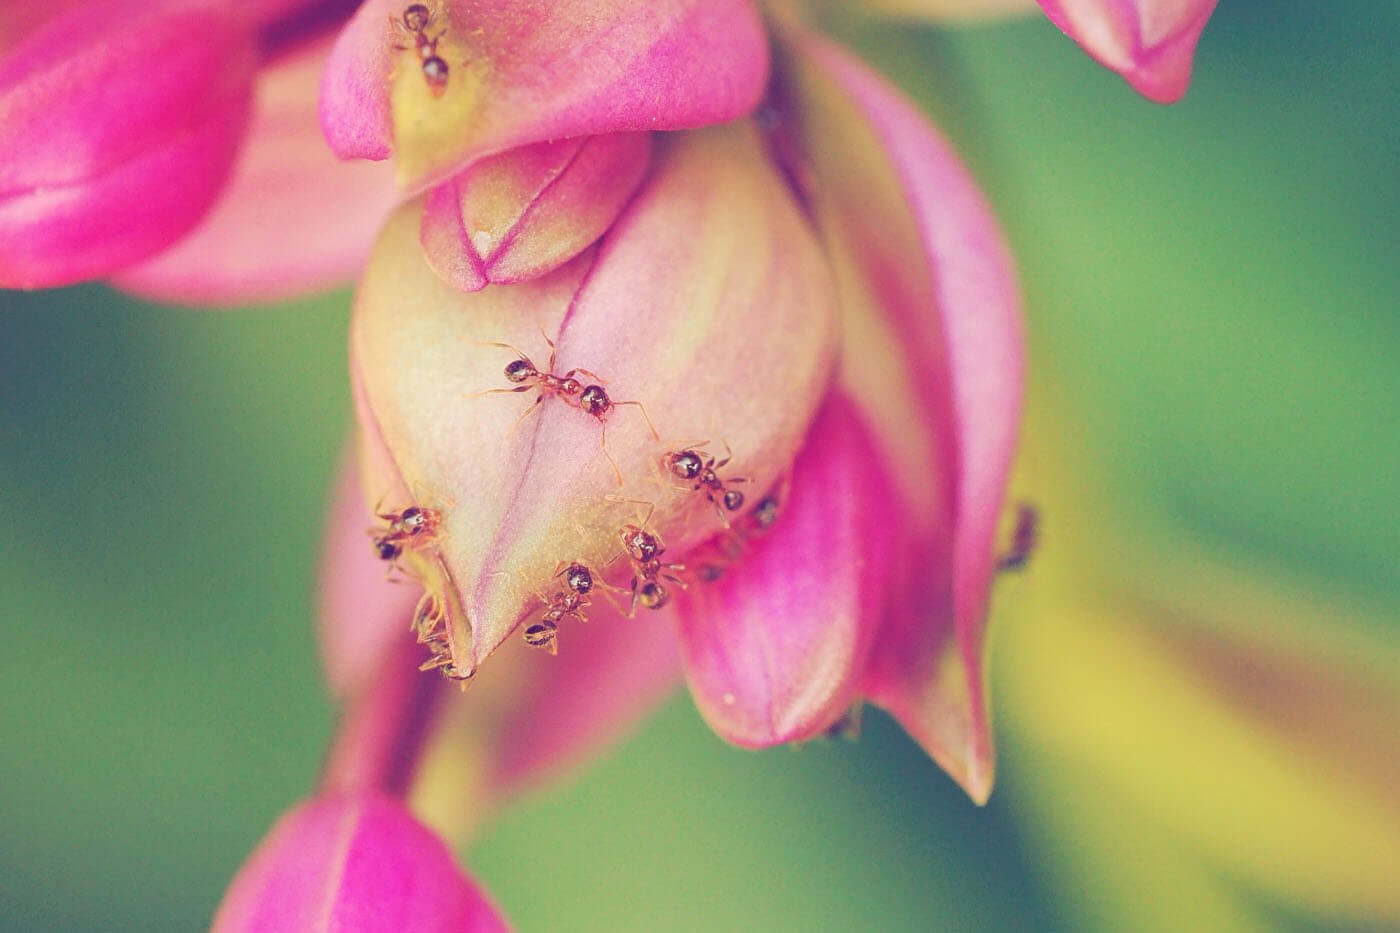 Ants on Plants. 